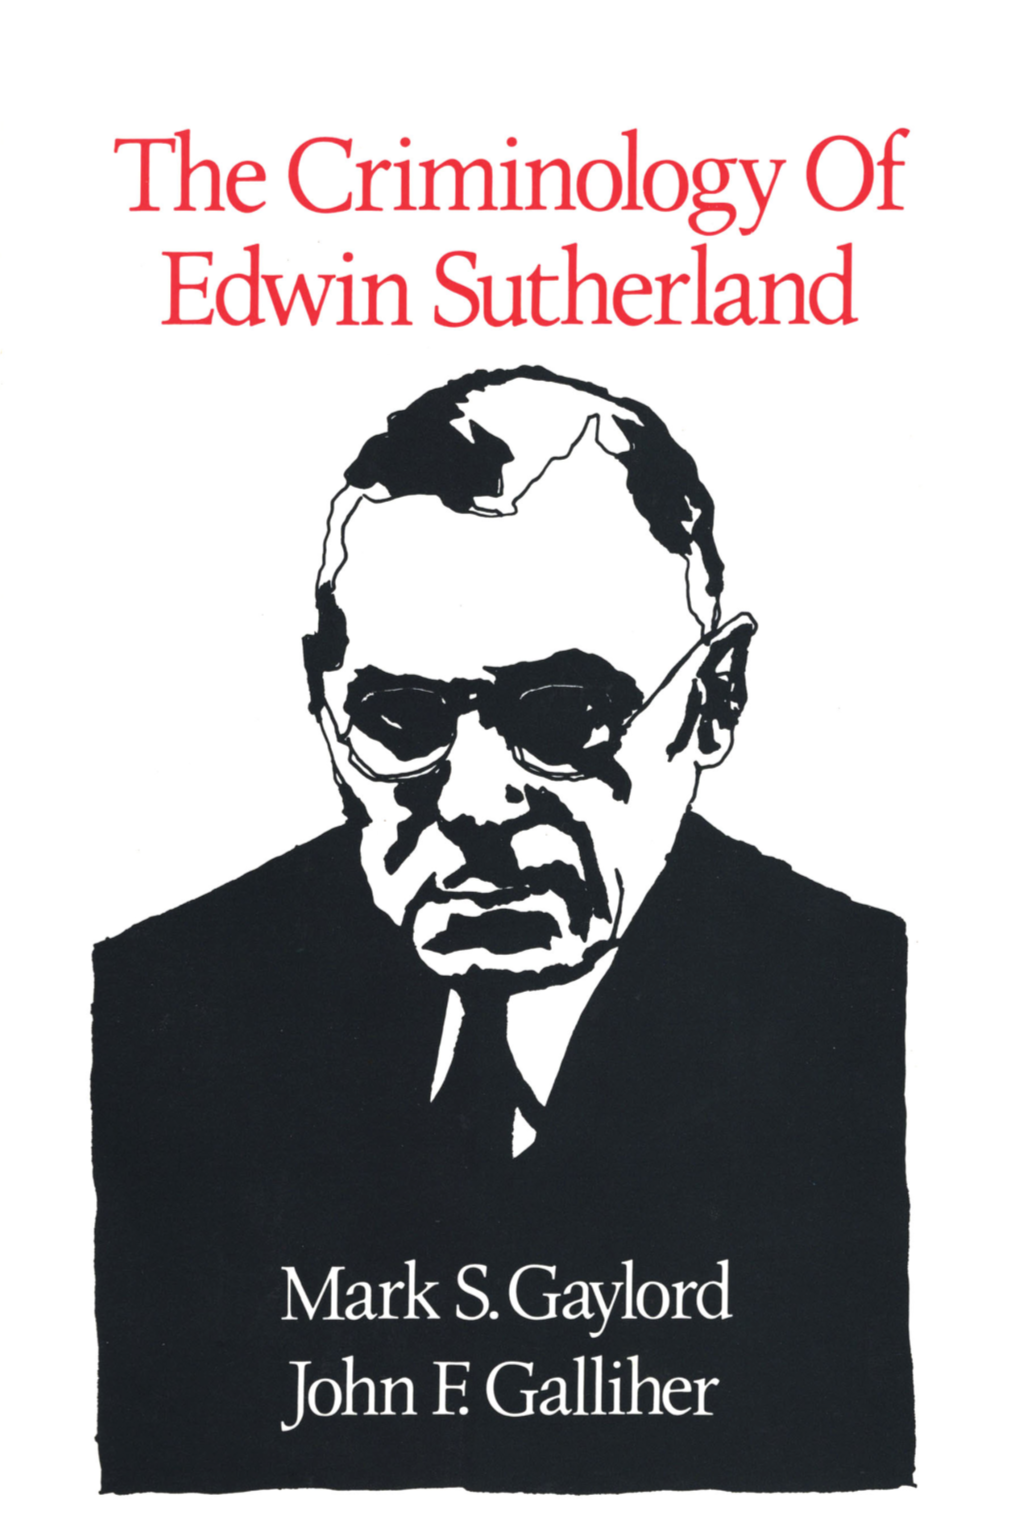 The Criminology of Edwin Sutherland